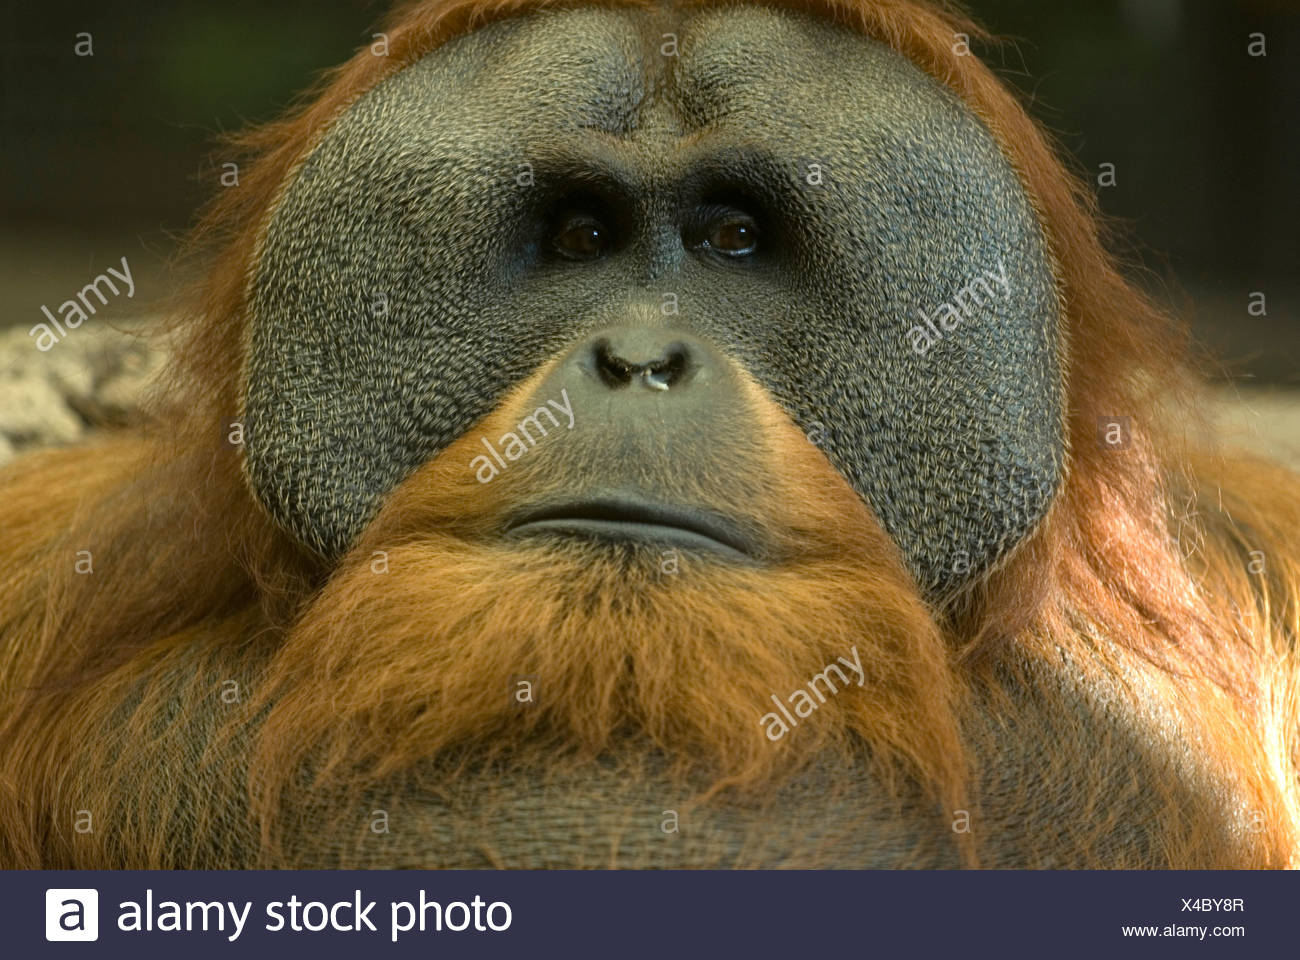 a-sumatran-orangutan-at-the-sedgwick-county-zoo-X4BY8R.jpg